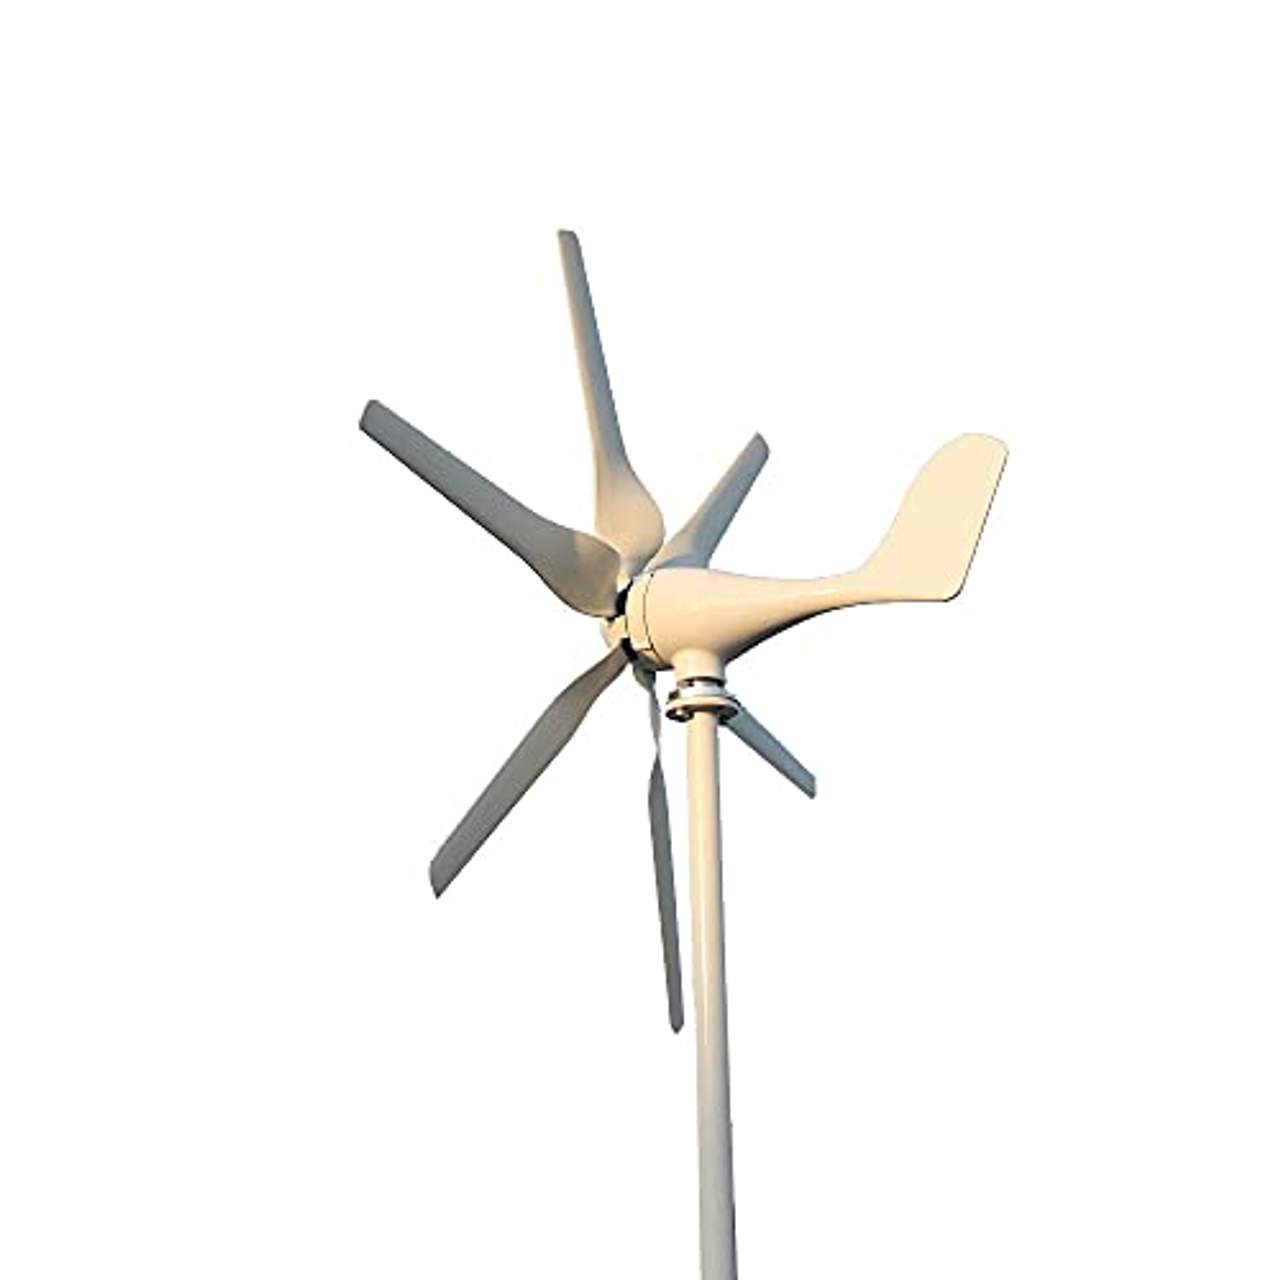  48V 800W Windgenerator Windkraftanlage Horizontaler Windturbine